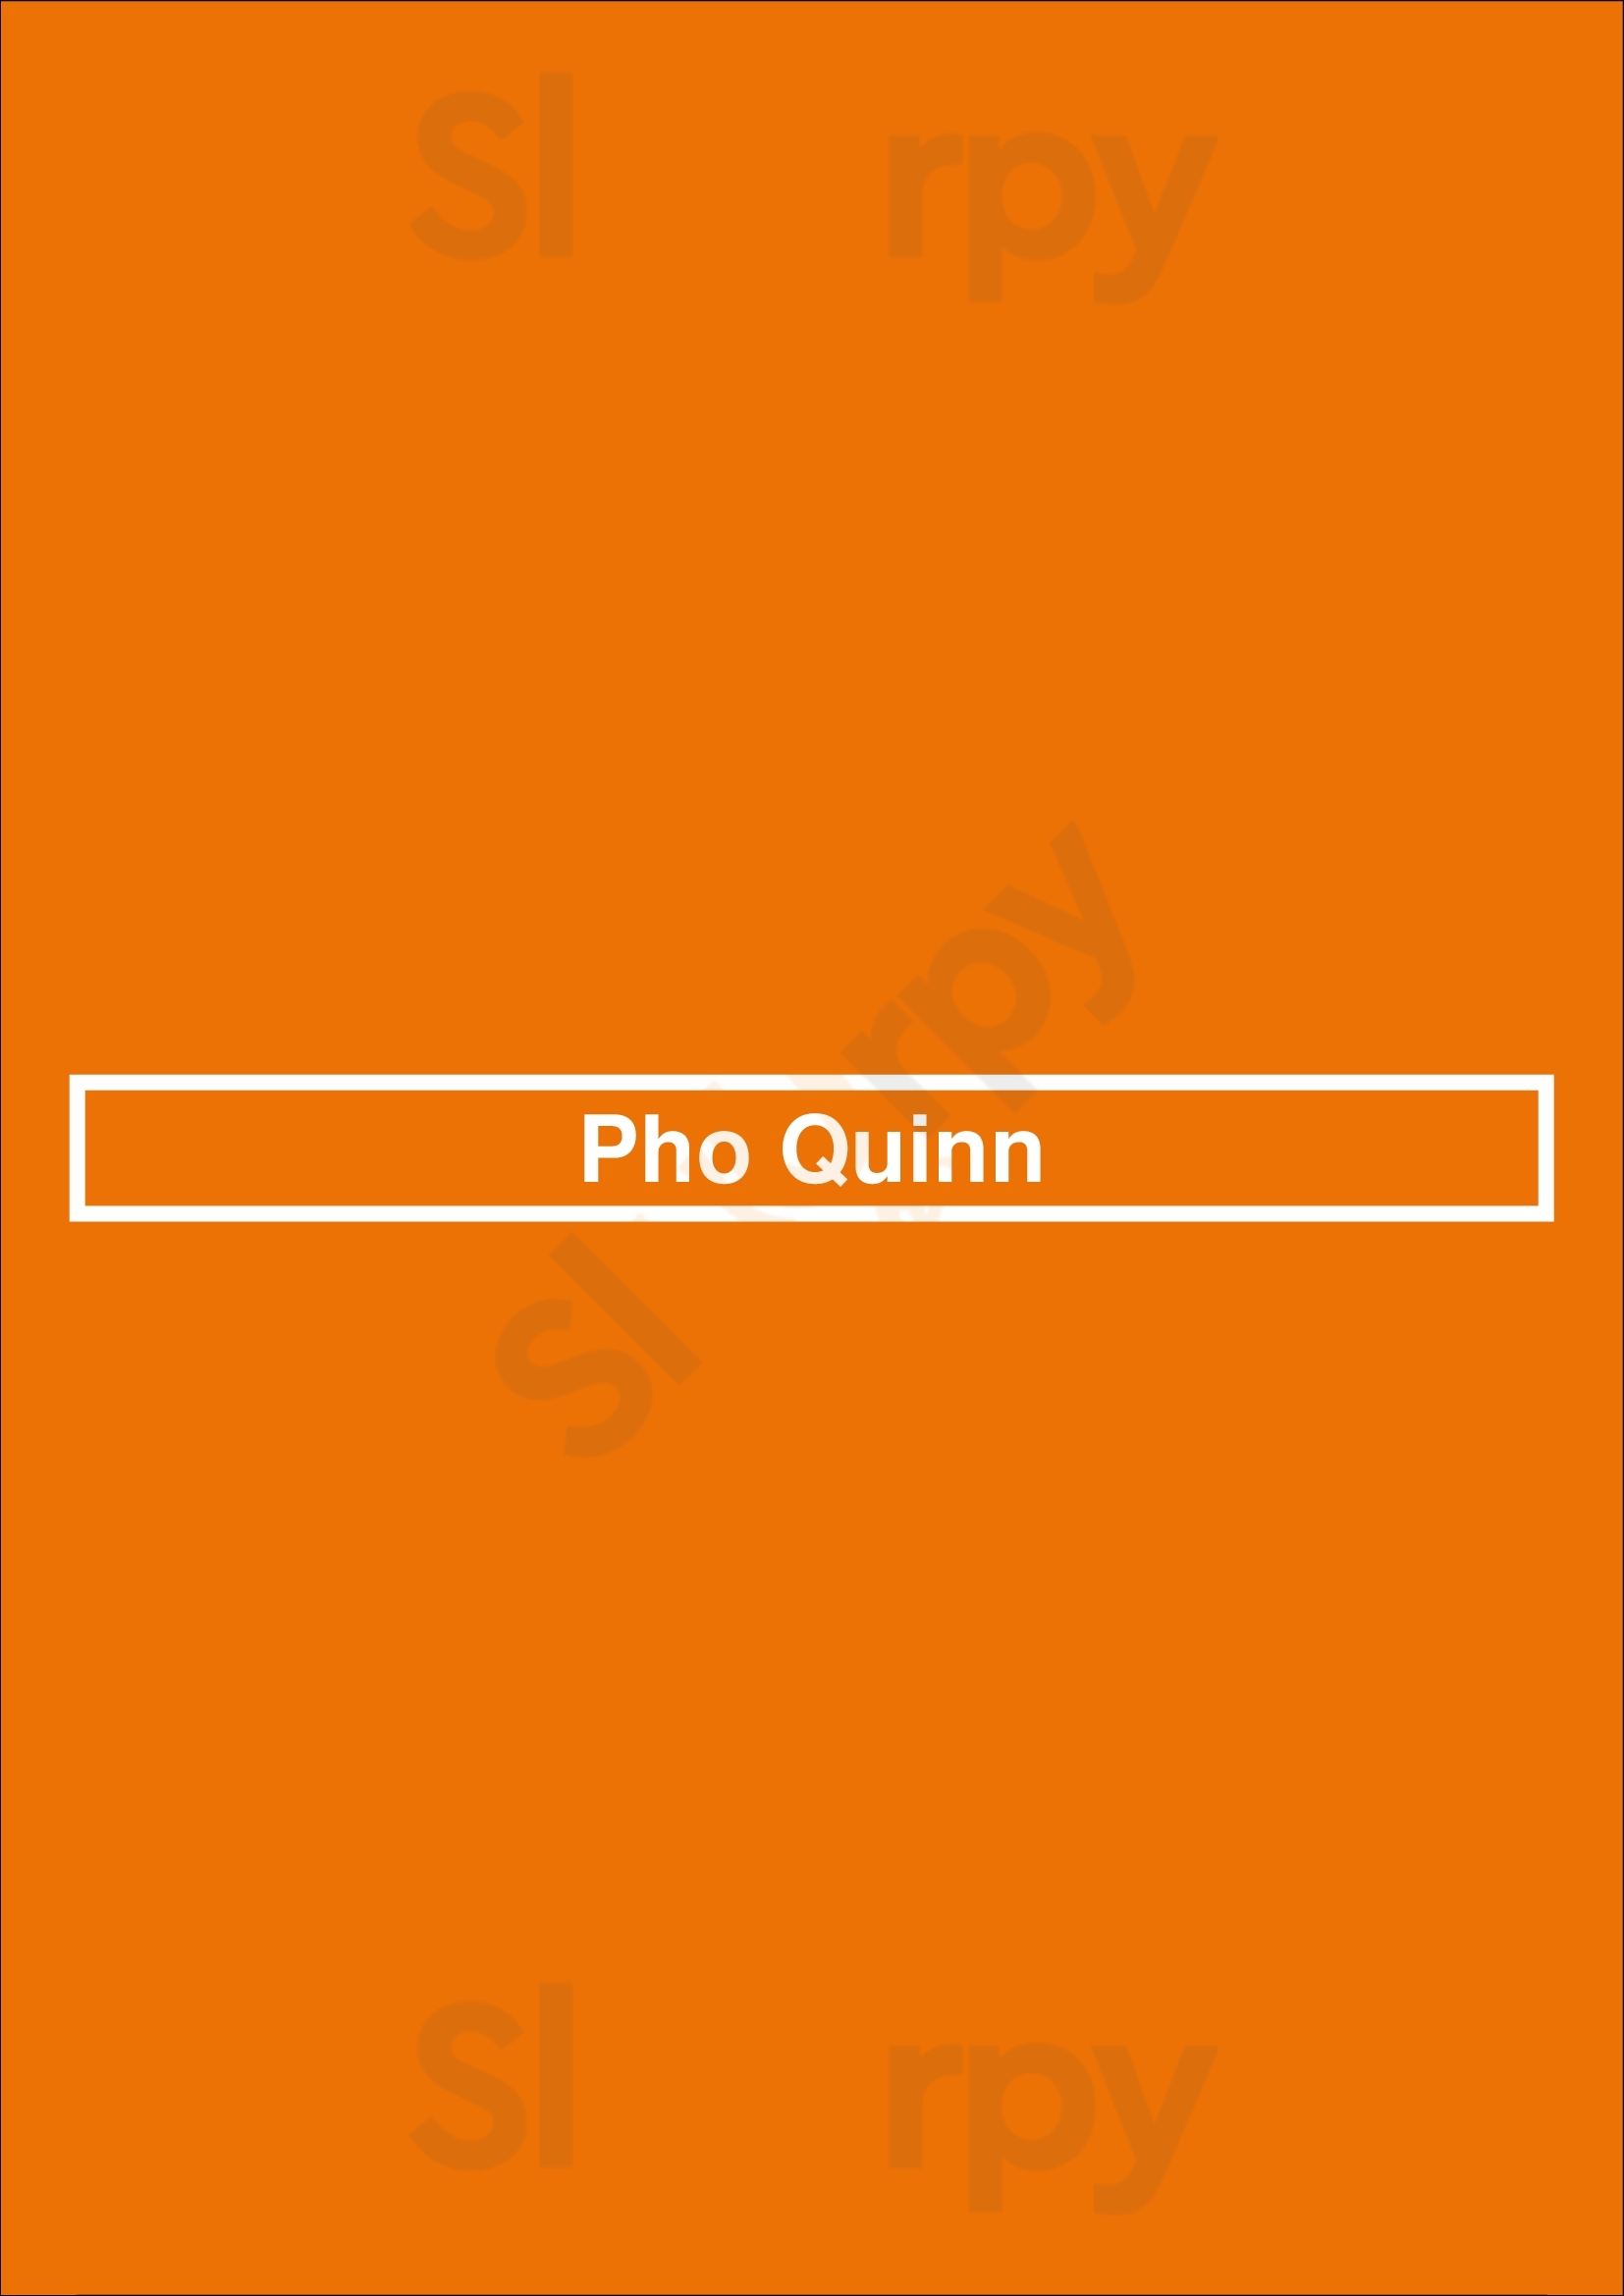 Pho Quinn Markham Menu - 1